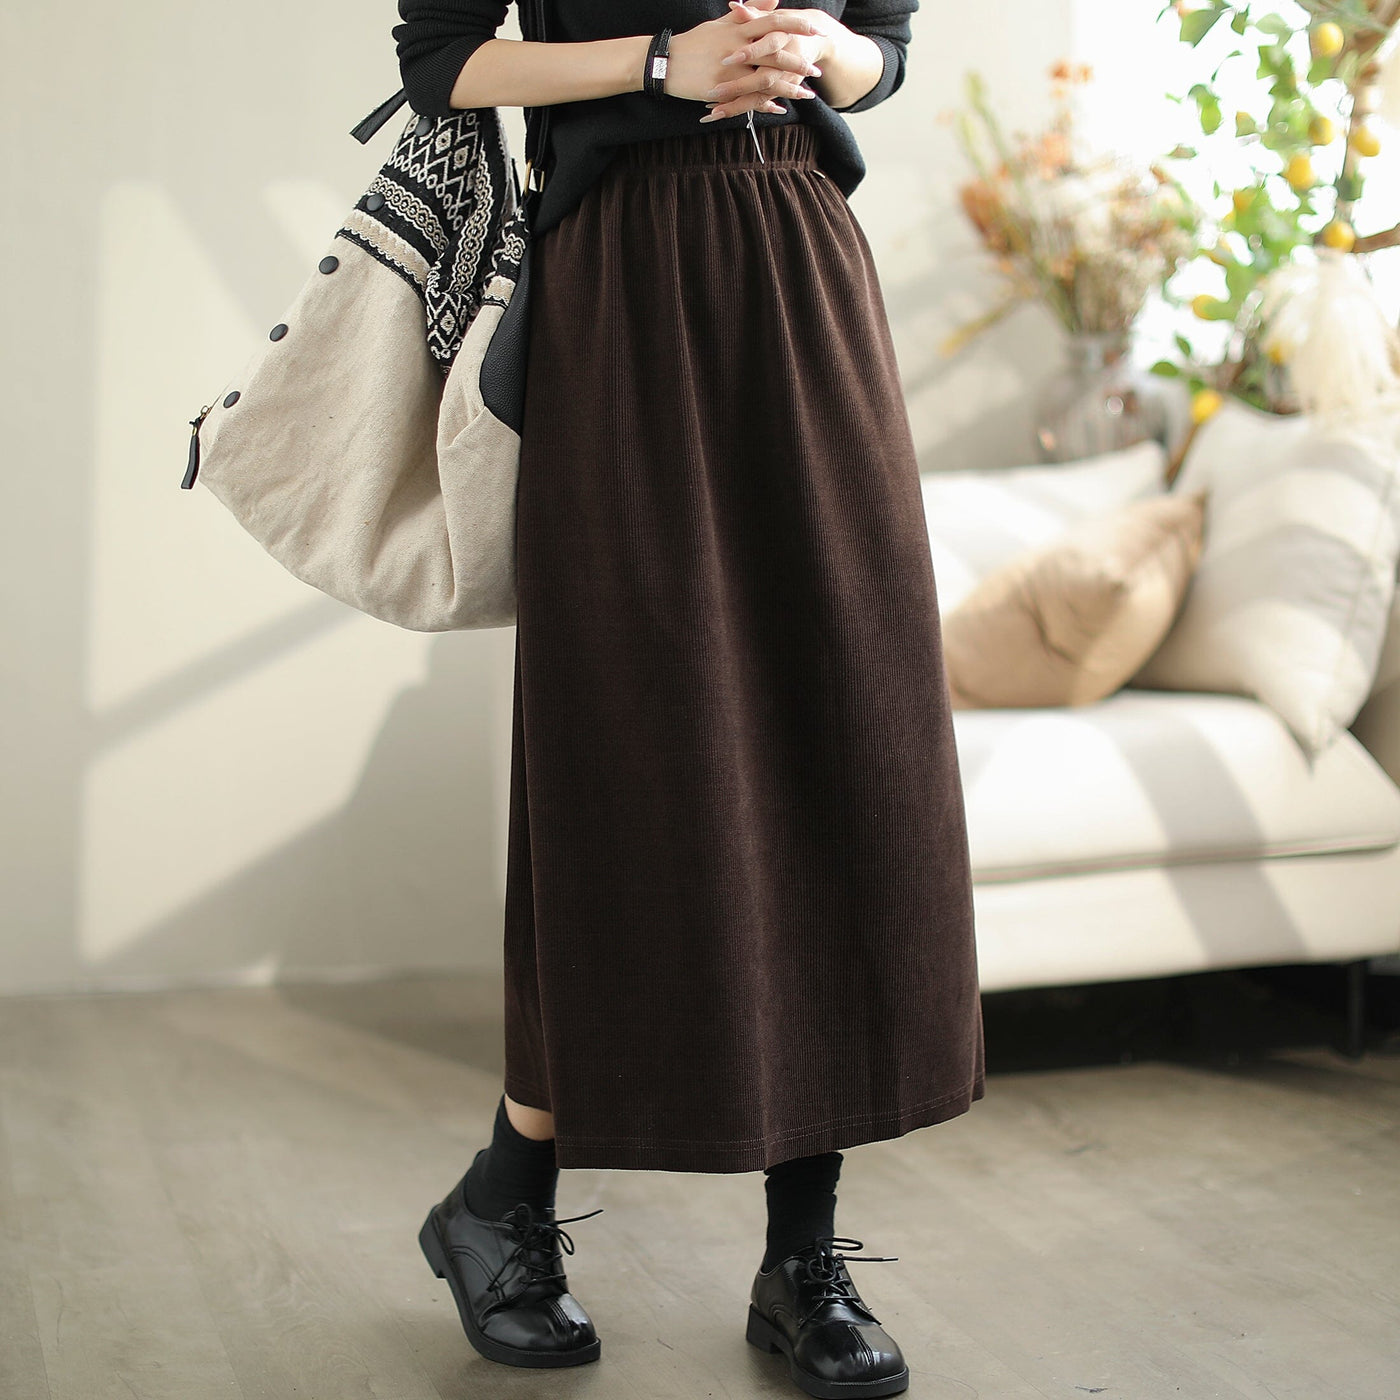 Autumn Minimalist Corduroy Casual A-Line Skirt